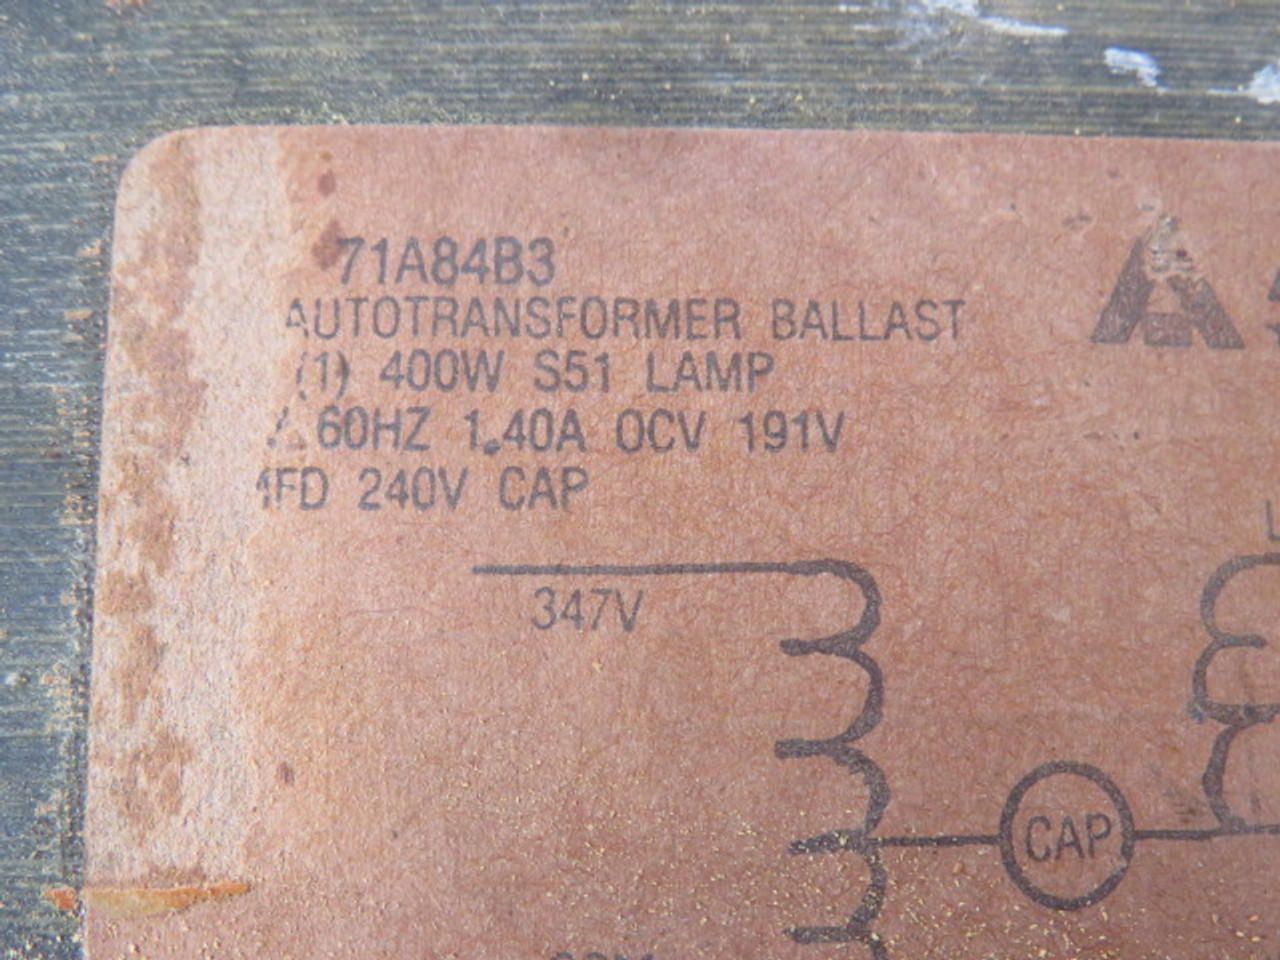 Advance 71A84B3 Autotransformer Ballast 400W 347V 1.40A 60Hz USED